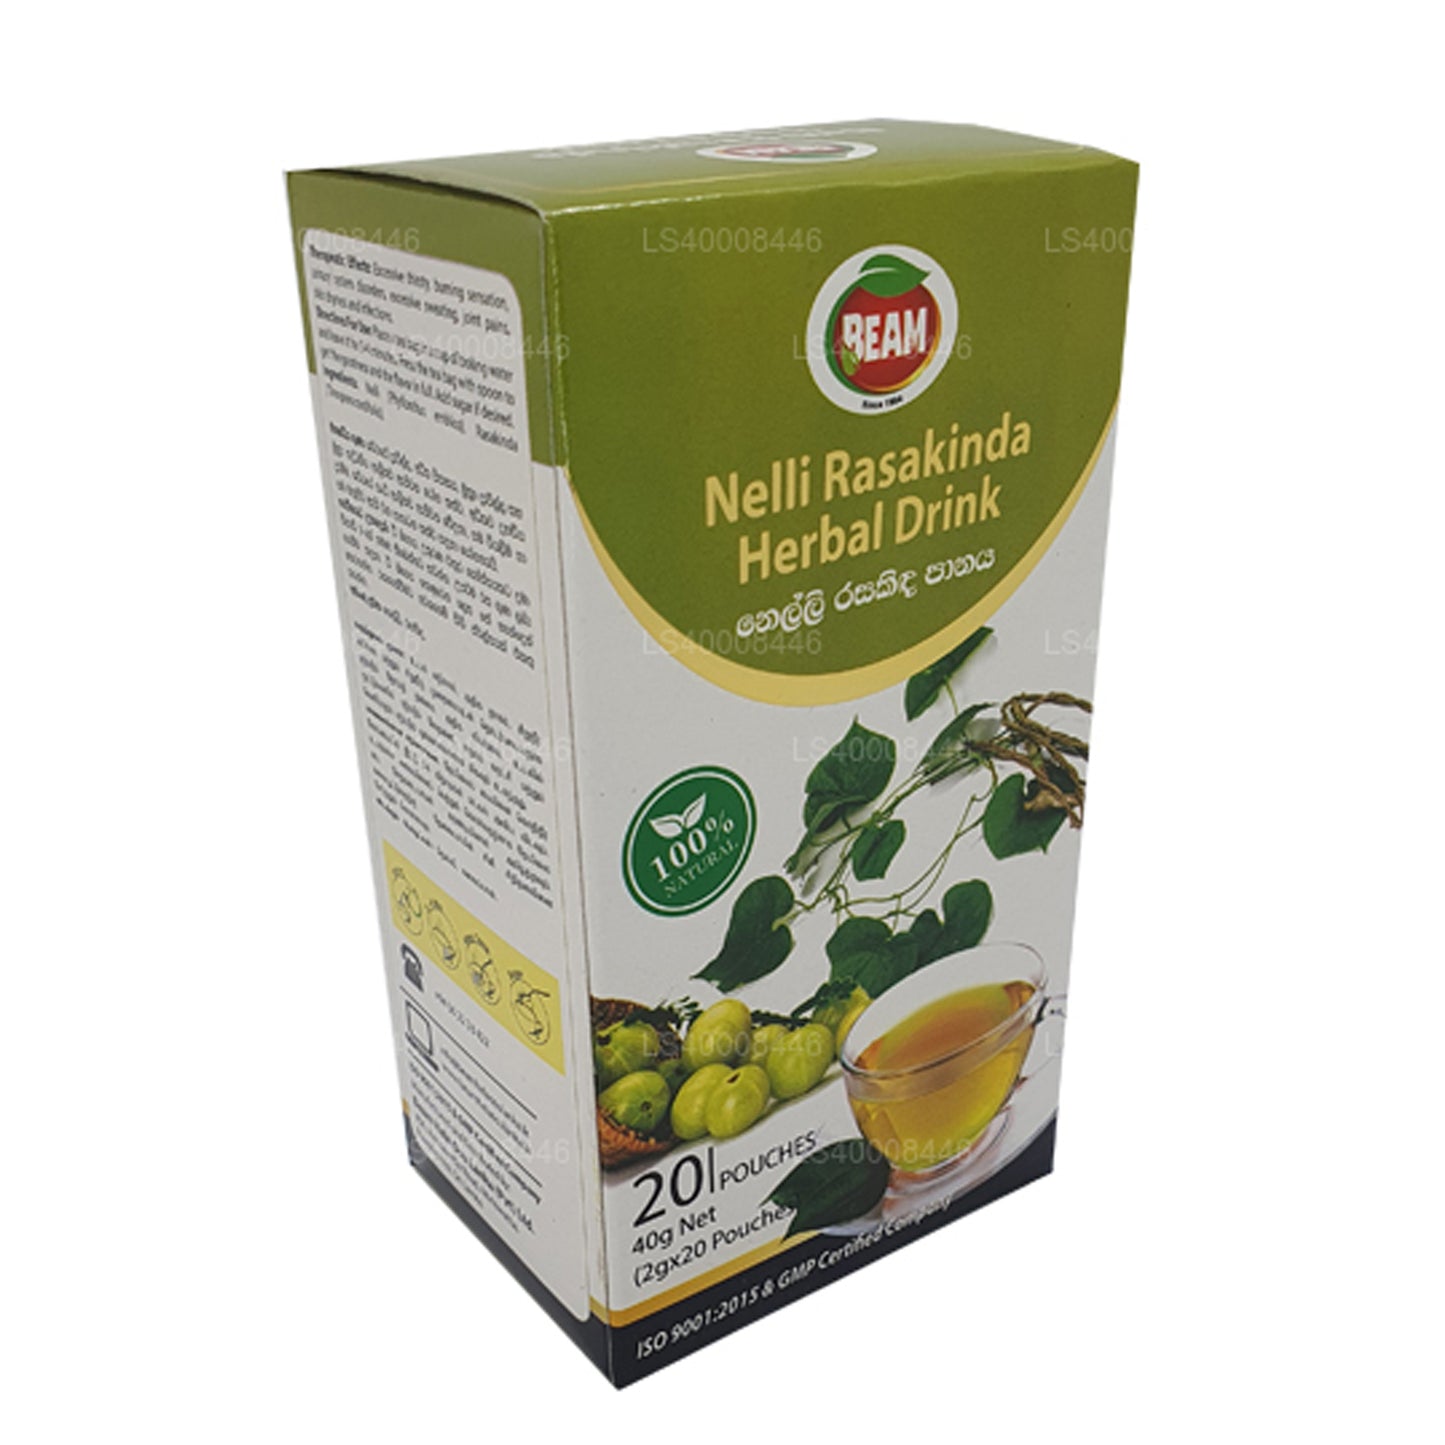 Boisson aux herbes Beam Nelli Rasakinda (40 g) 20 sachets de thé